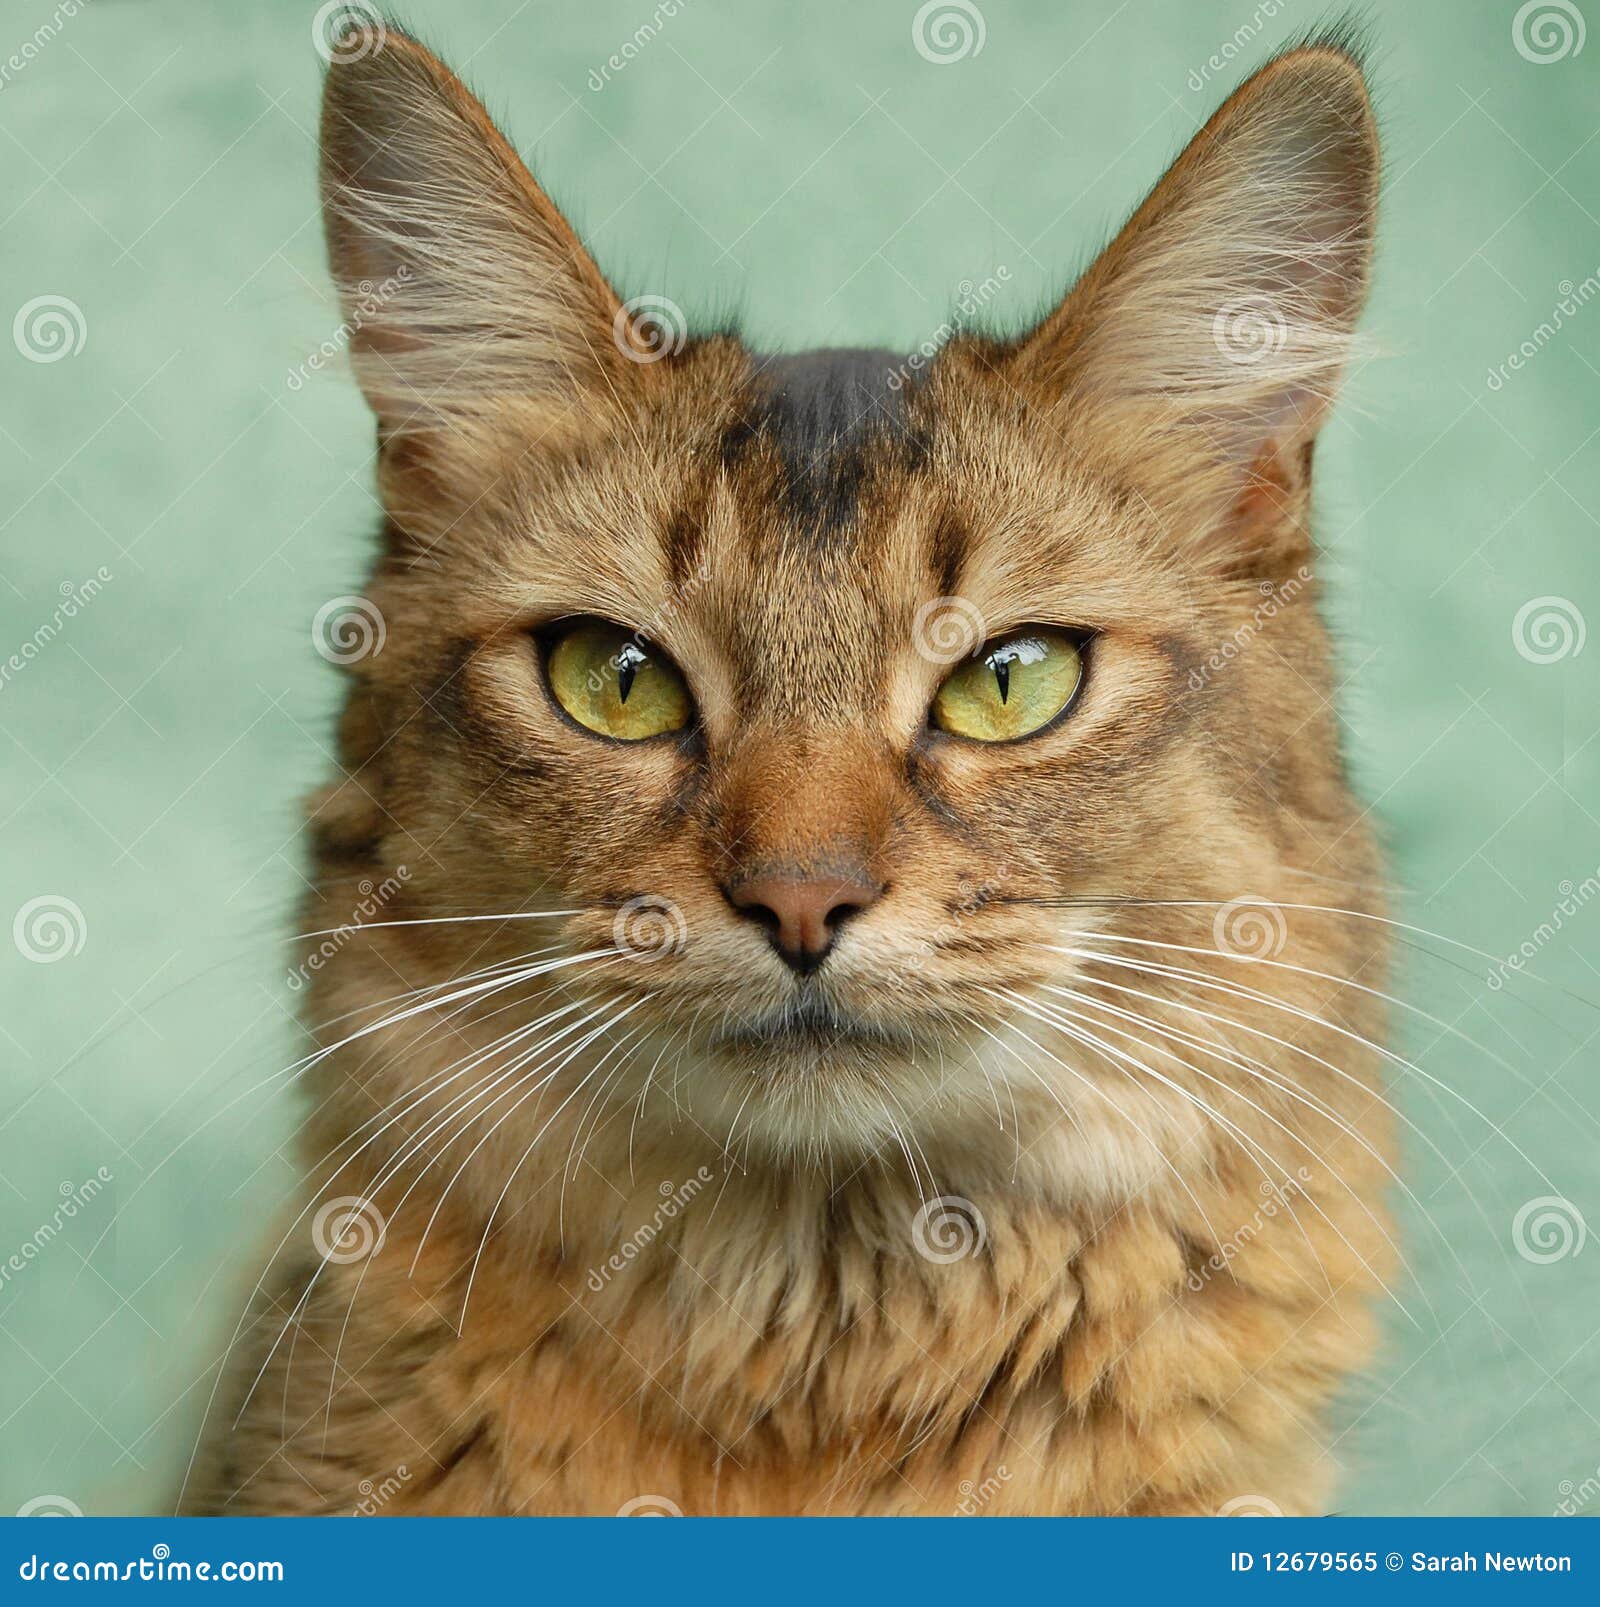 portrait of a usual somali cat